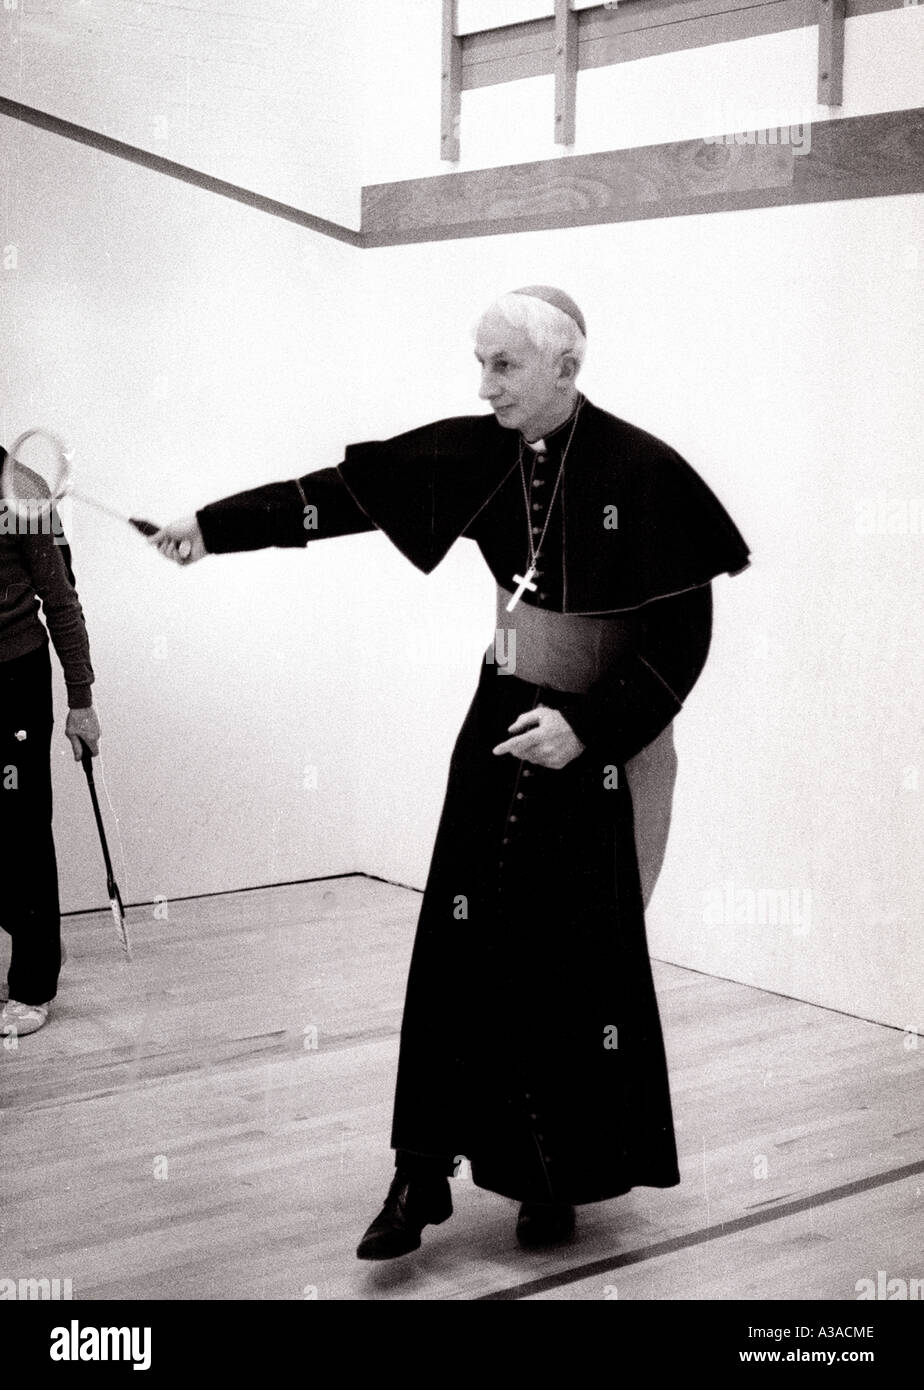 Cardinal Basil Hume Archbish of Westminster London UK plays squash during a school visit Stock Photo